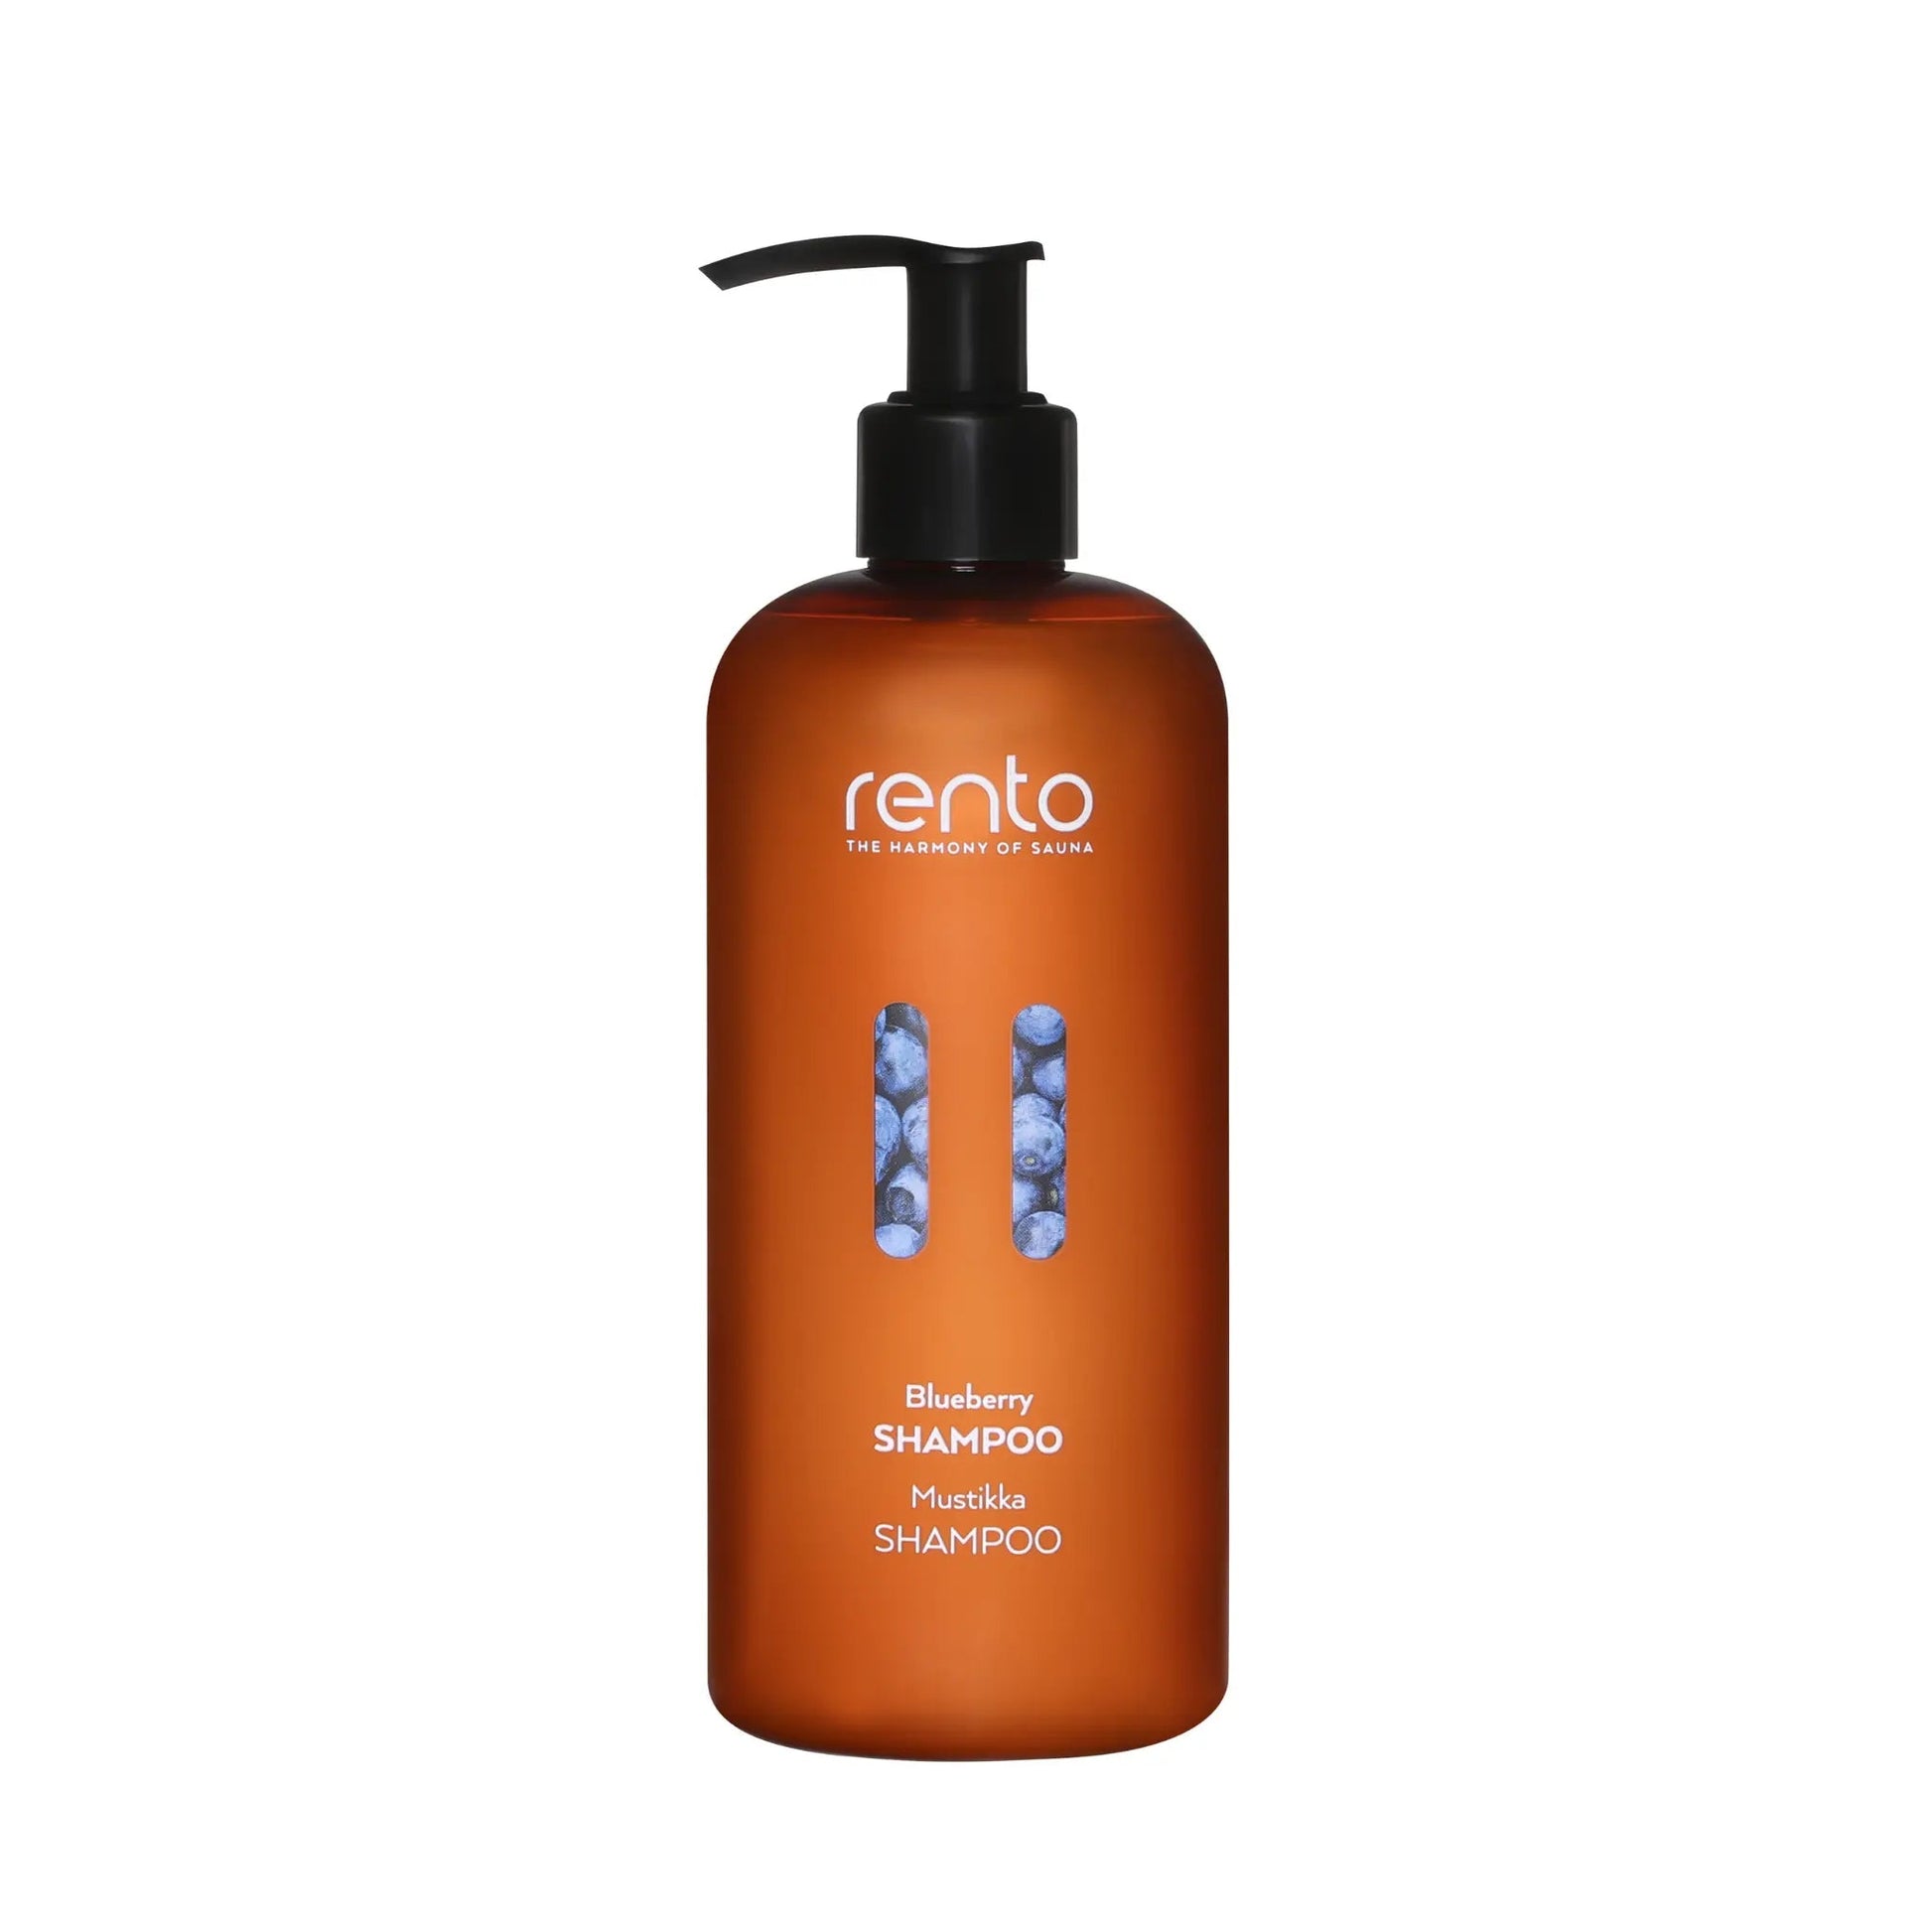 Rento Blueberry Shampoo 400 ml shampoo | Finnmark Sauna